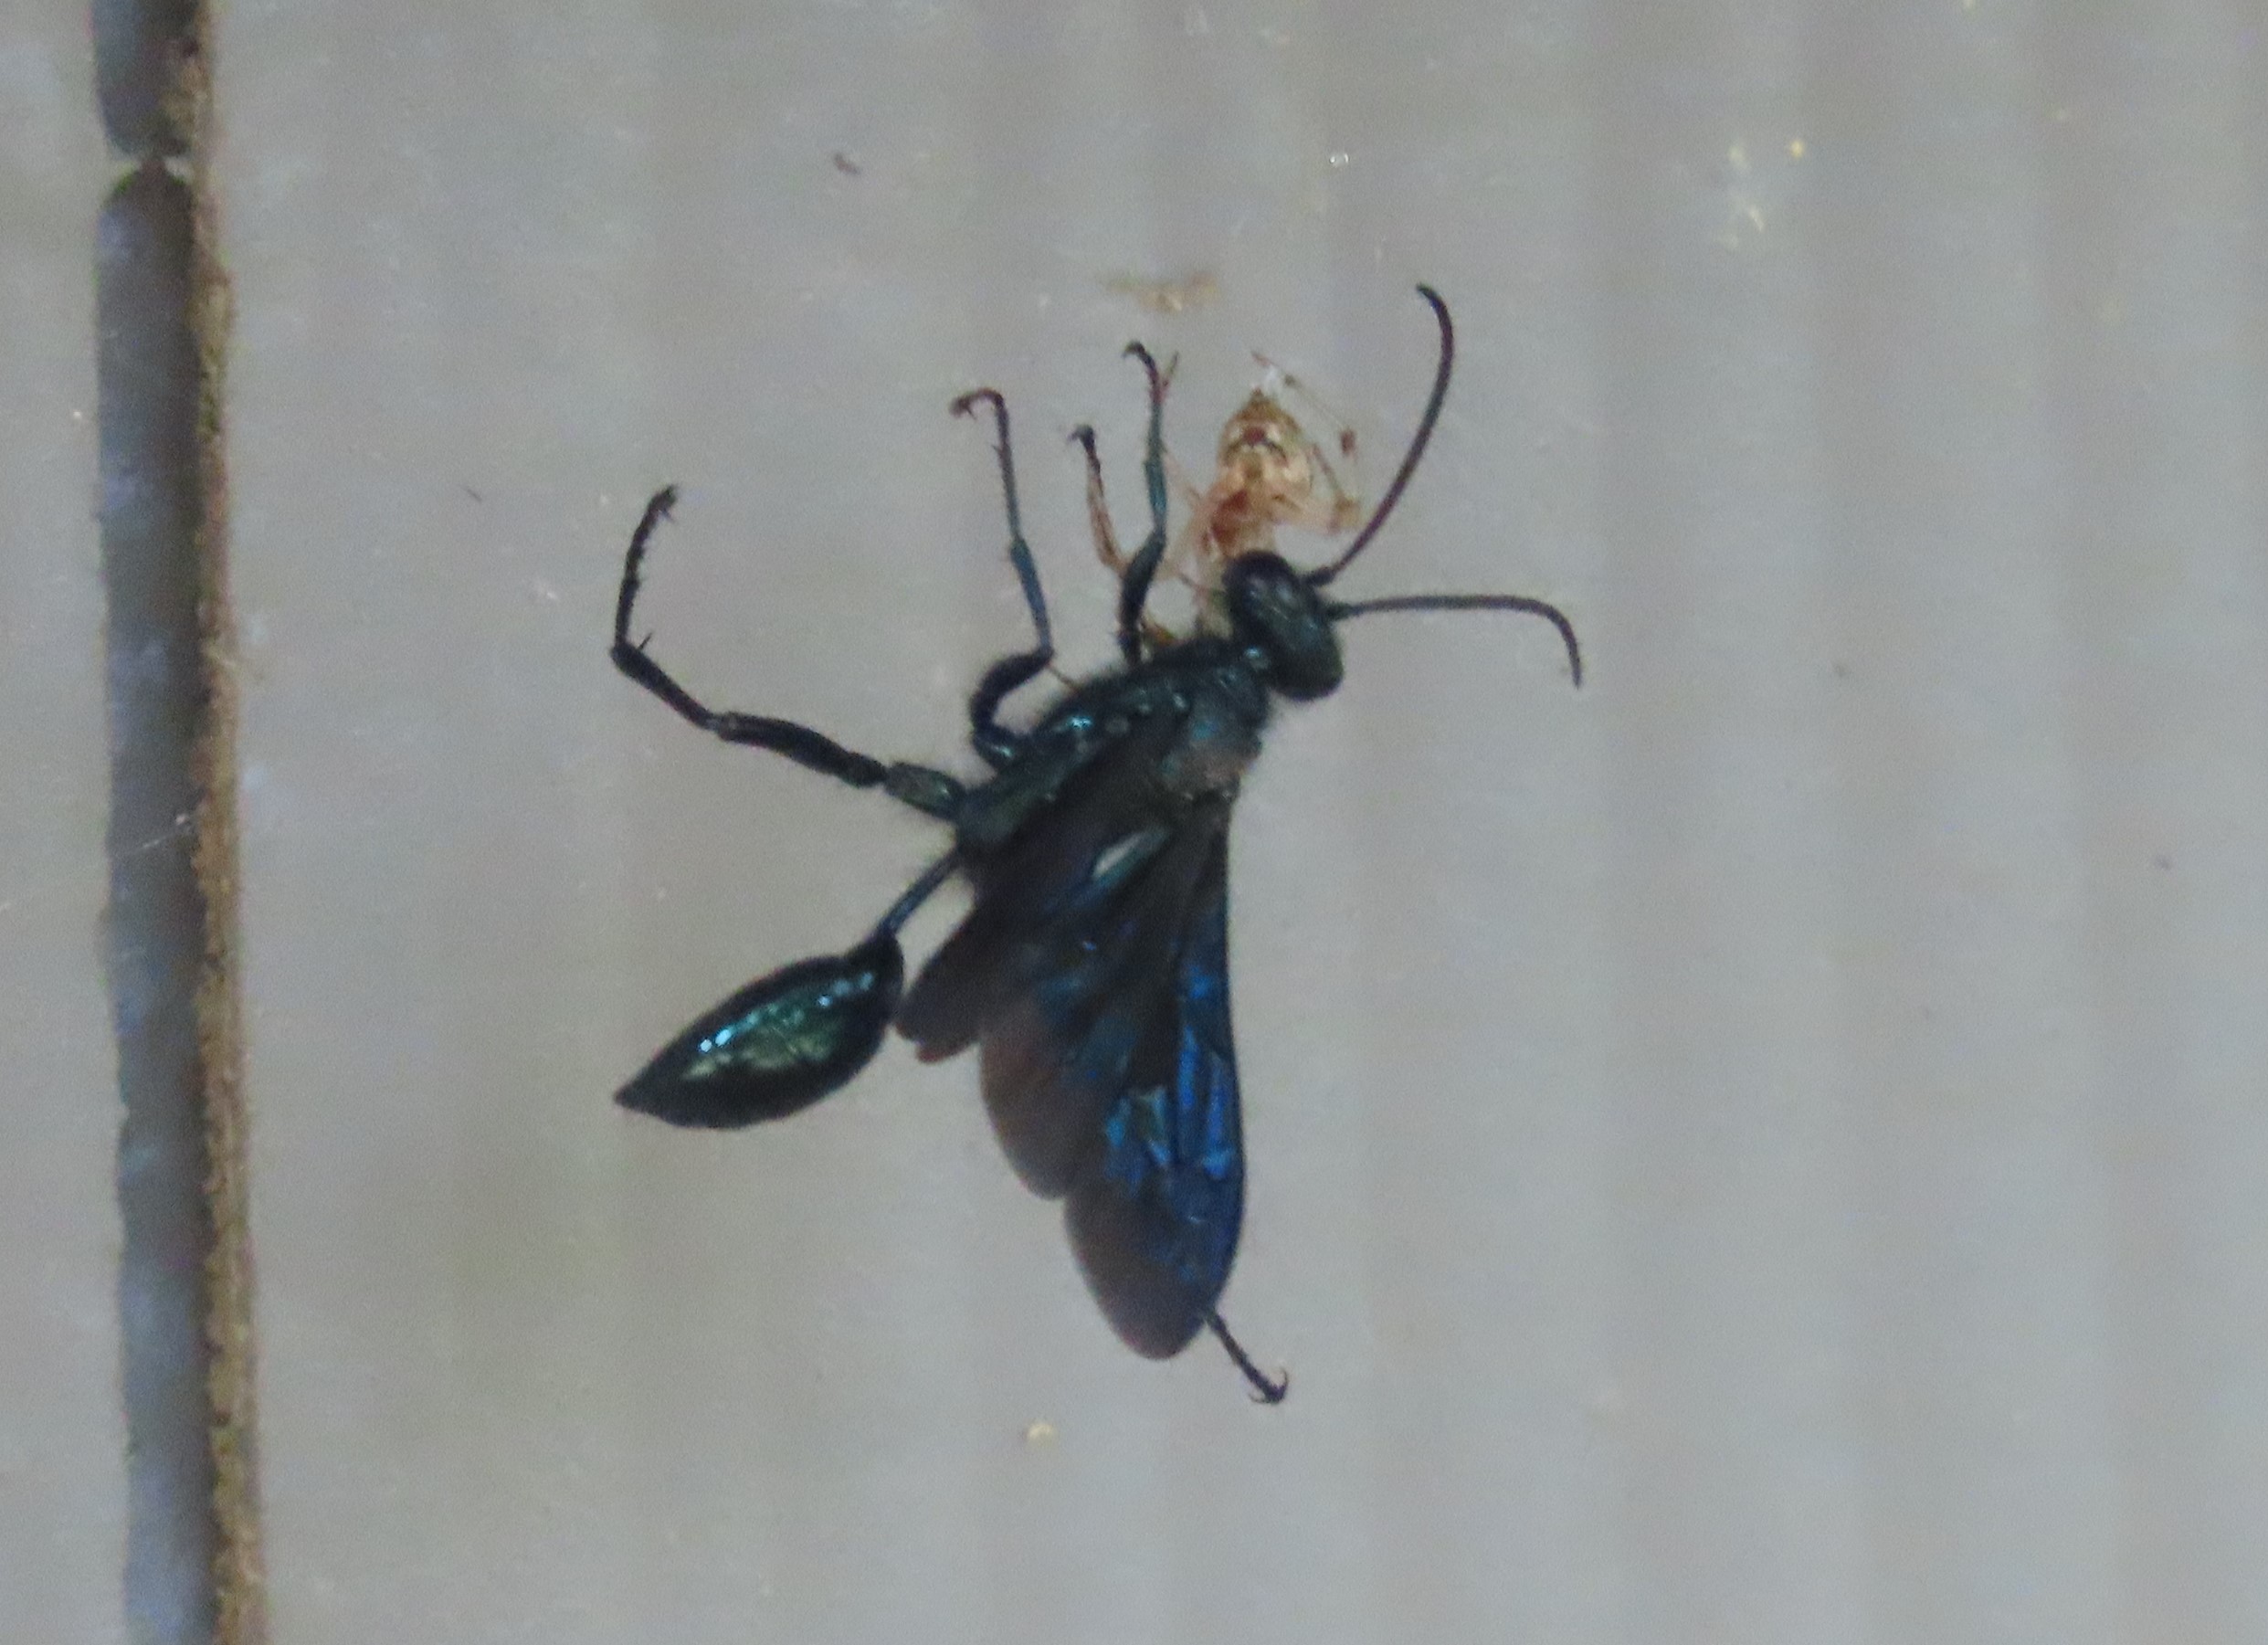 Maryland Biodiversity Project - Blue Mud Wasp (Chalybion californicum)